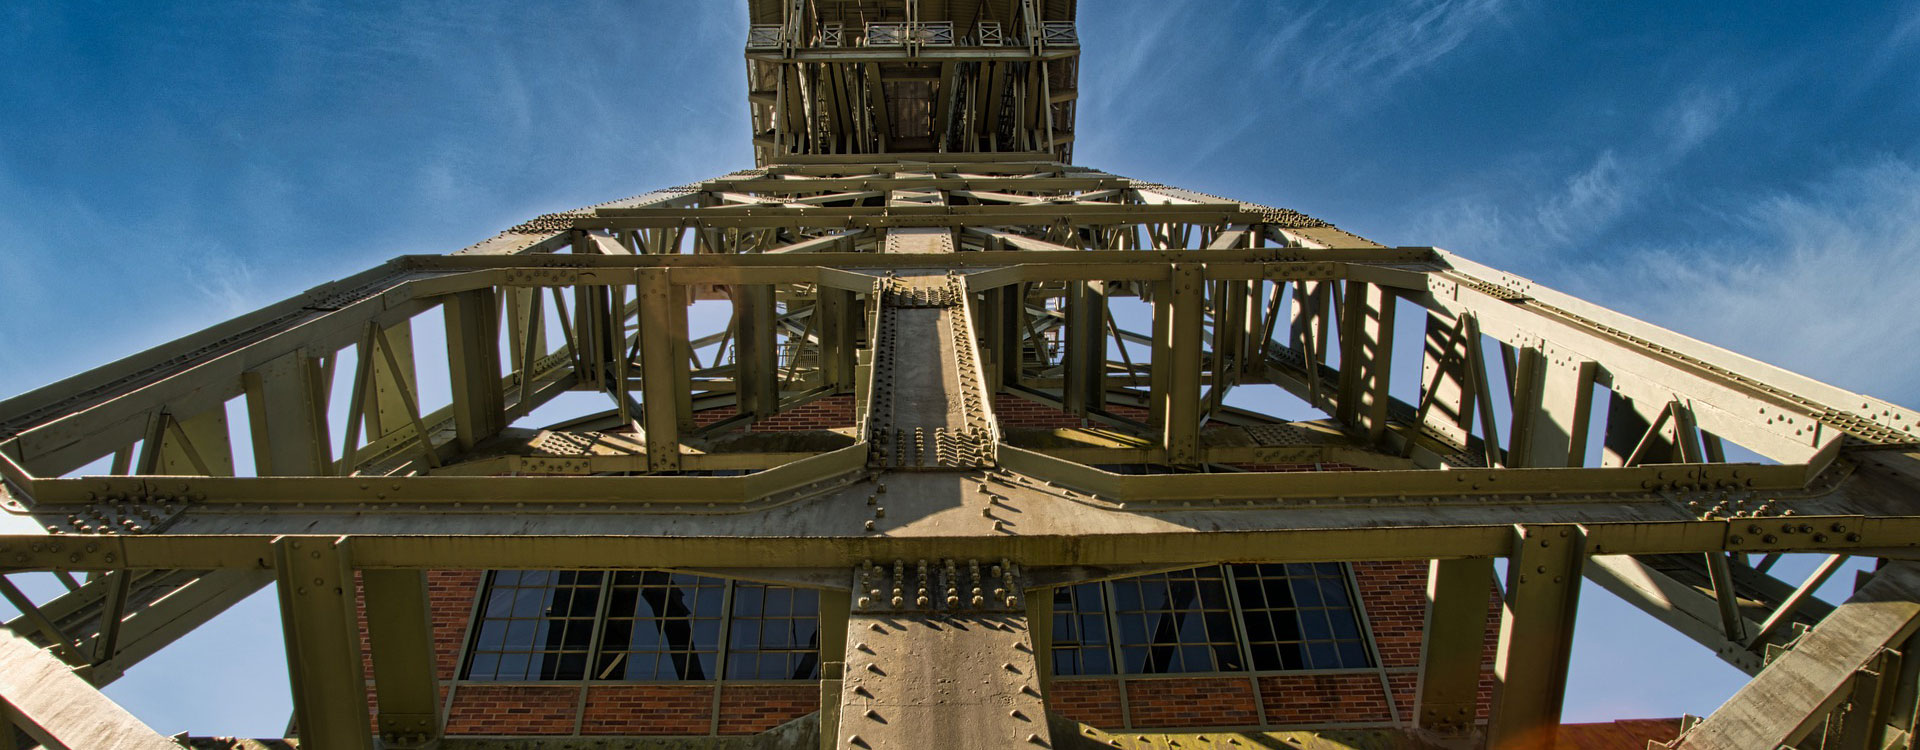 Image winding tower